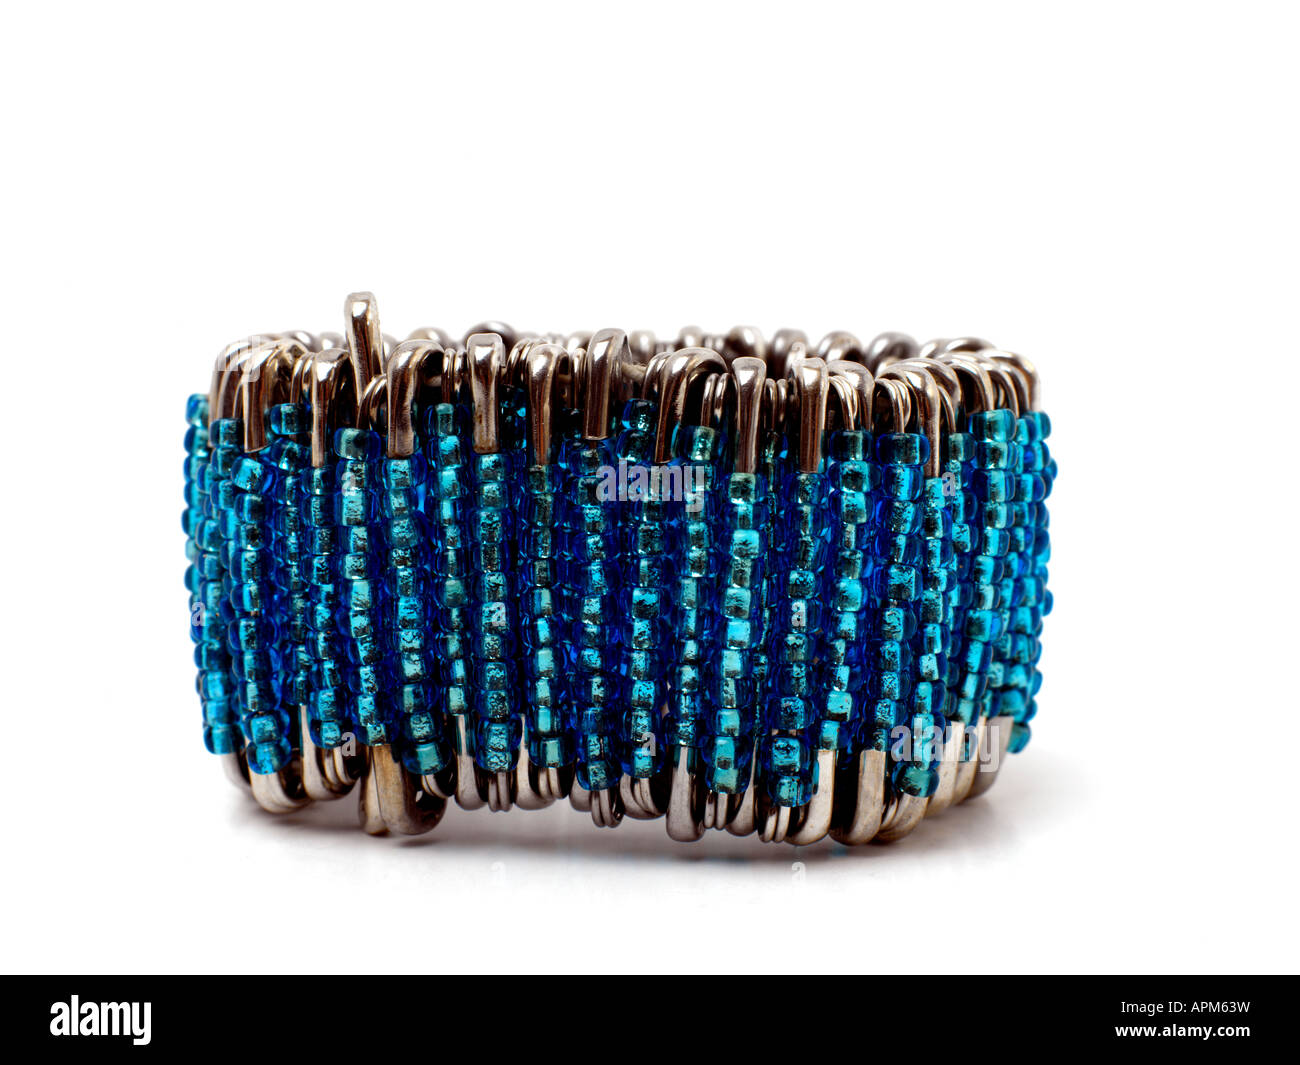 Johannesburg South Africa Armband Souvenir aus recycelten Materialien Sicherheitsnadel und Perlen gemacht Stockfoto